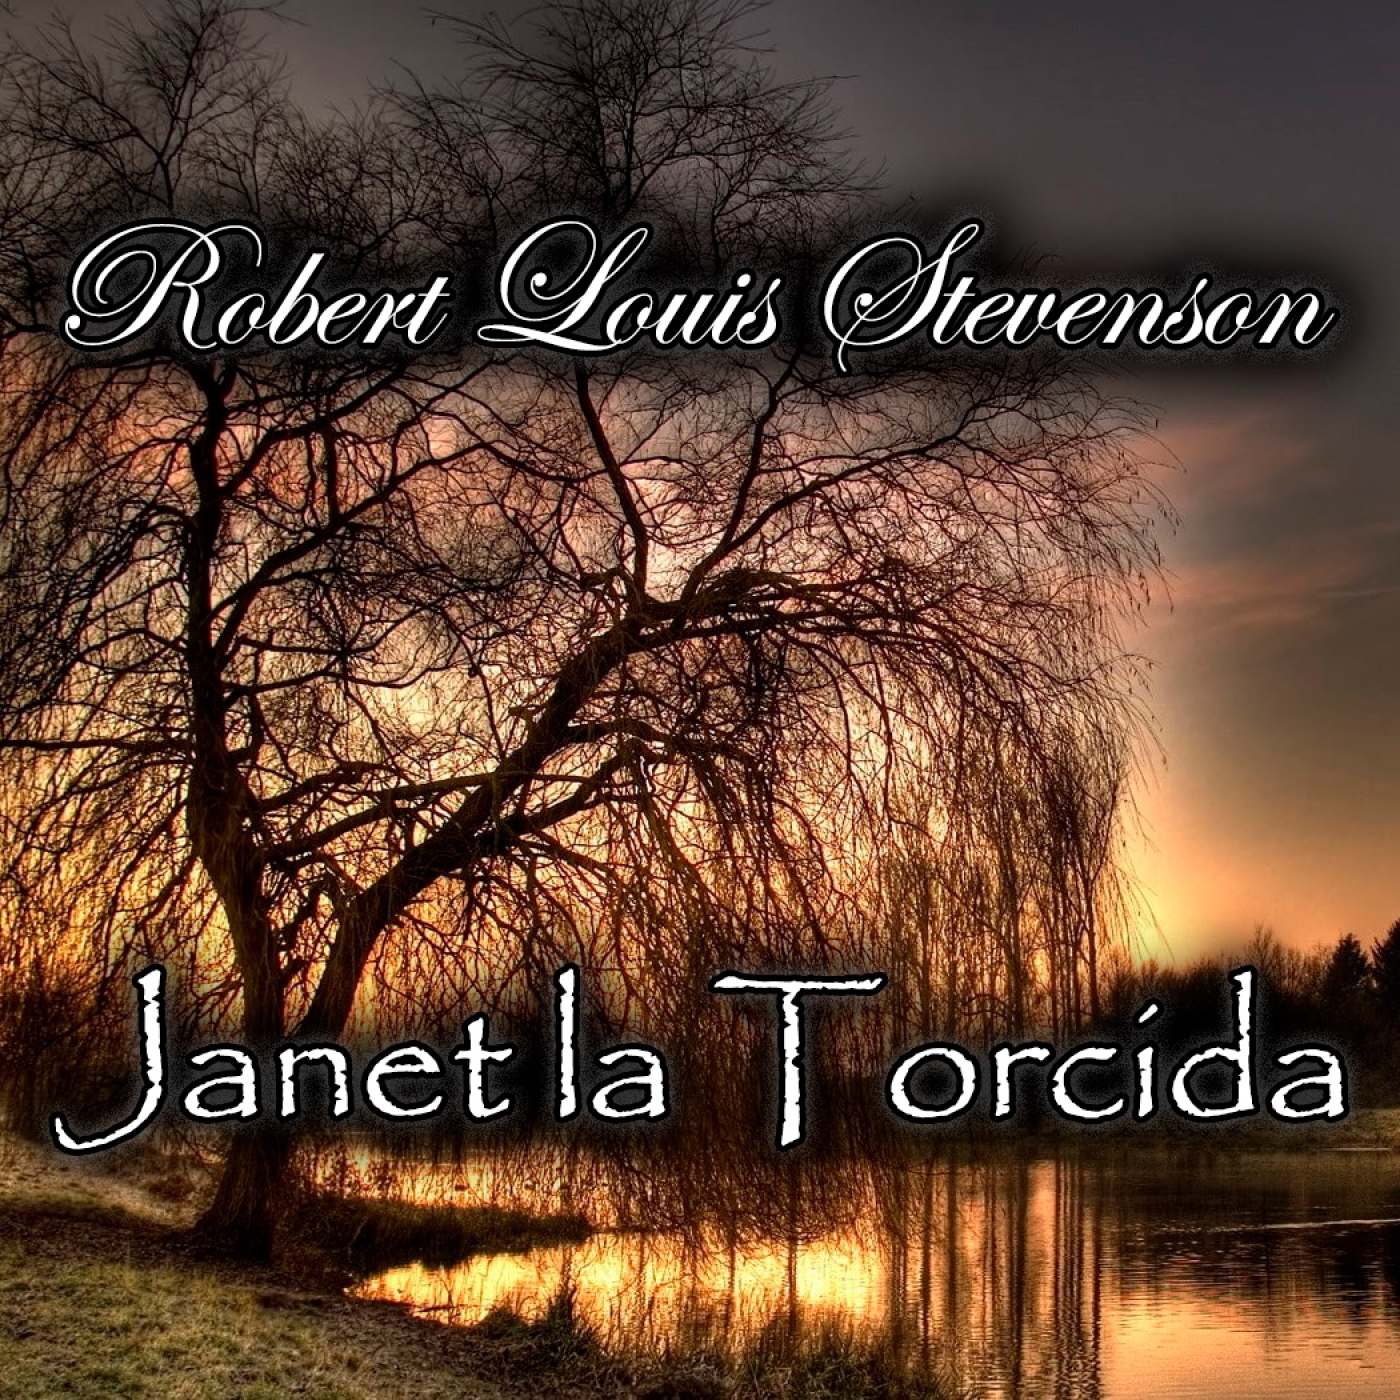 Janet la Torcida, Audiolibro de Robert Louis Stevenson